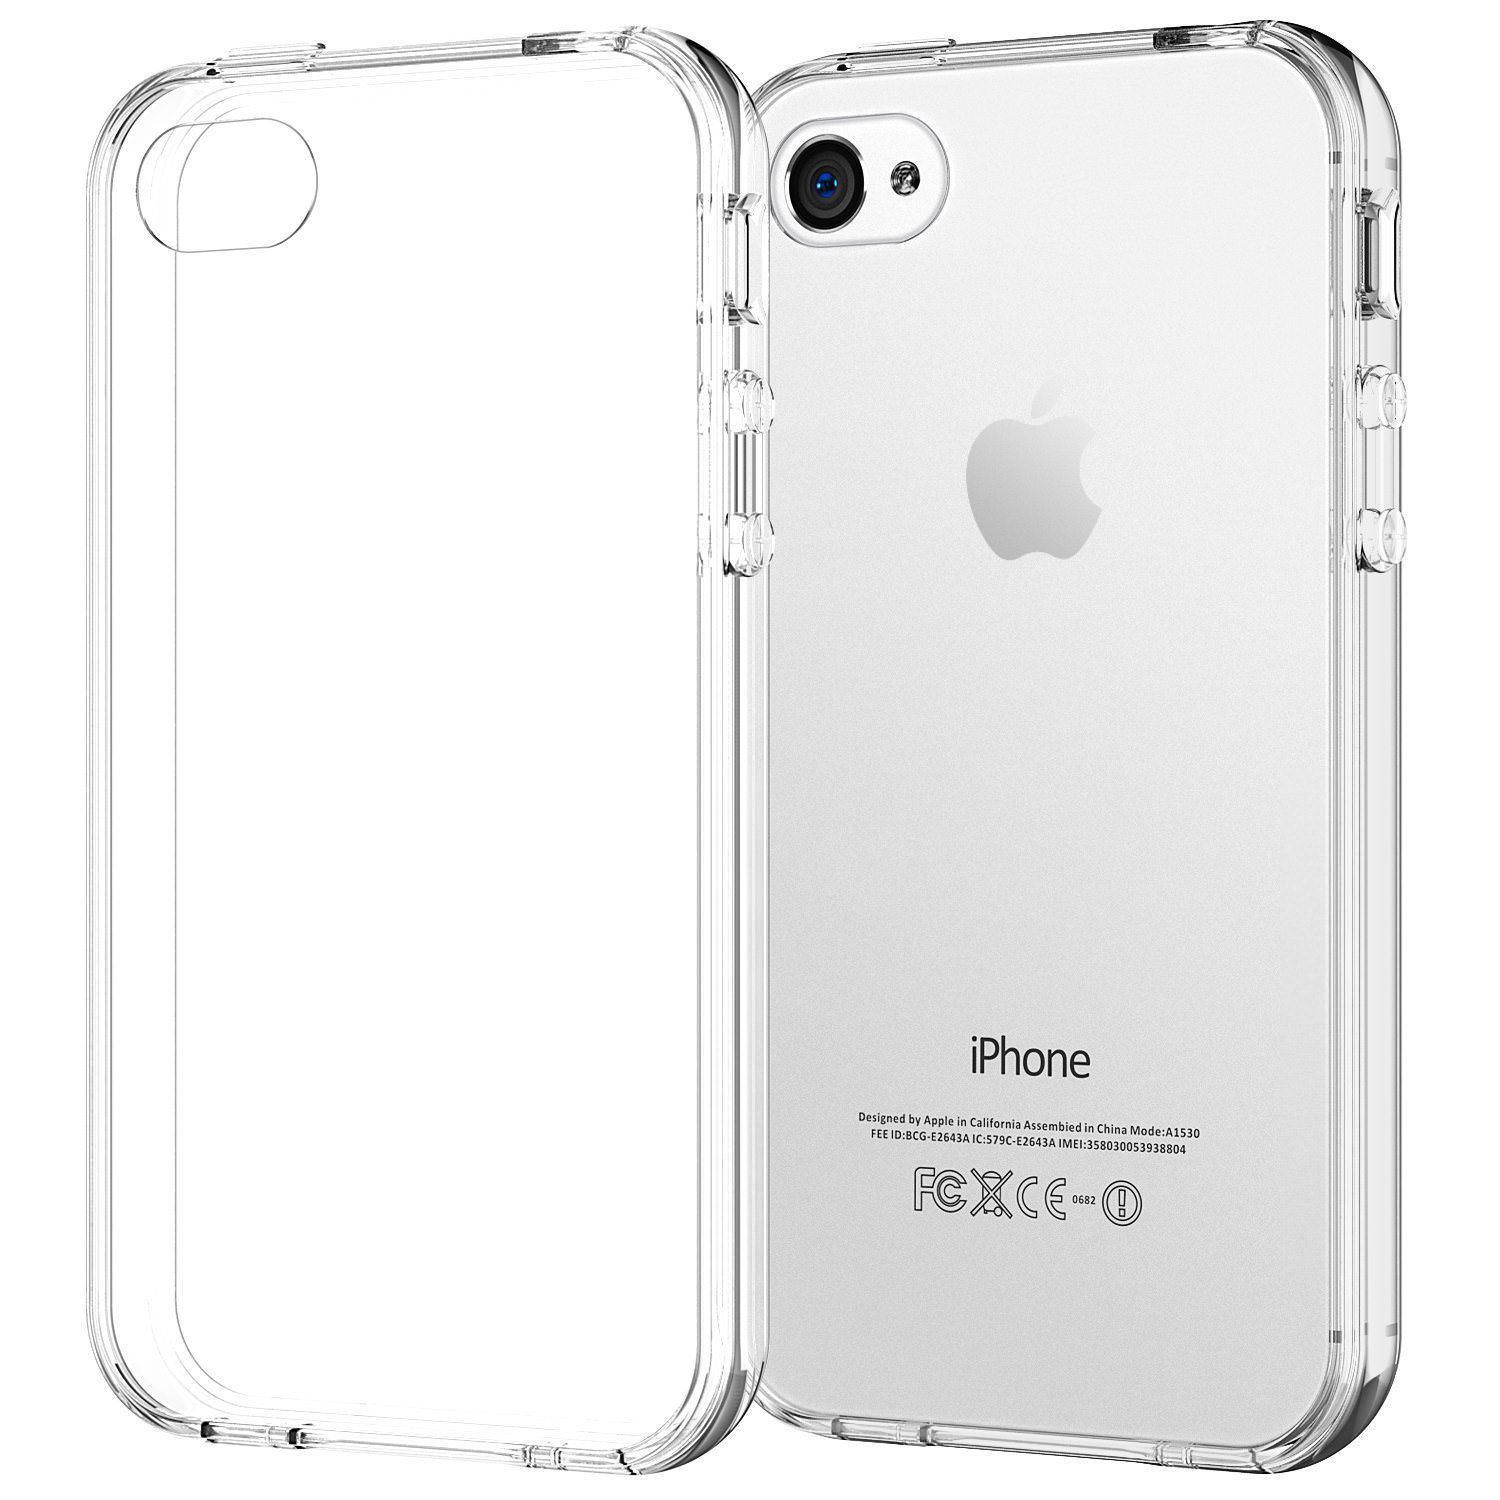 Apple iPhone 4S Soft Silicon Cases SPARXON - Transparent - Plain Back ...